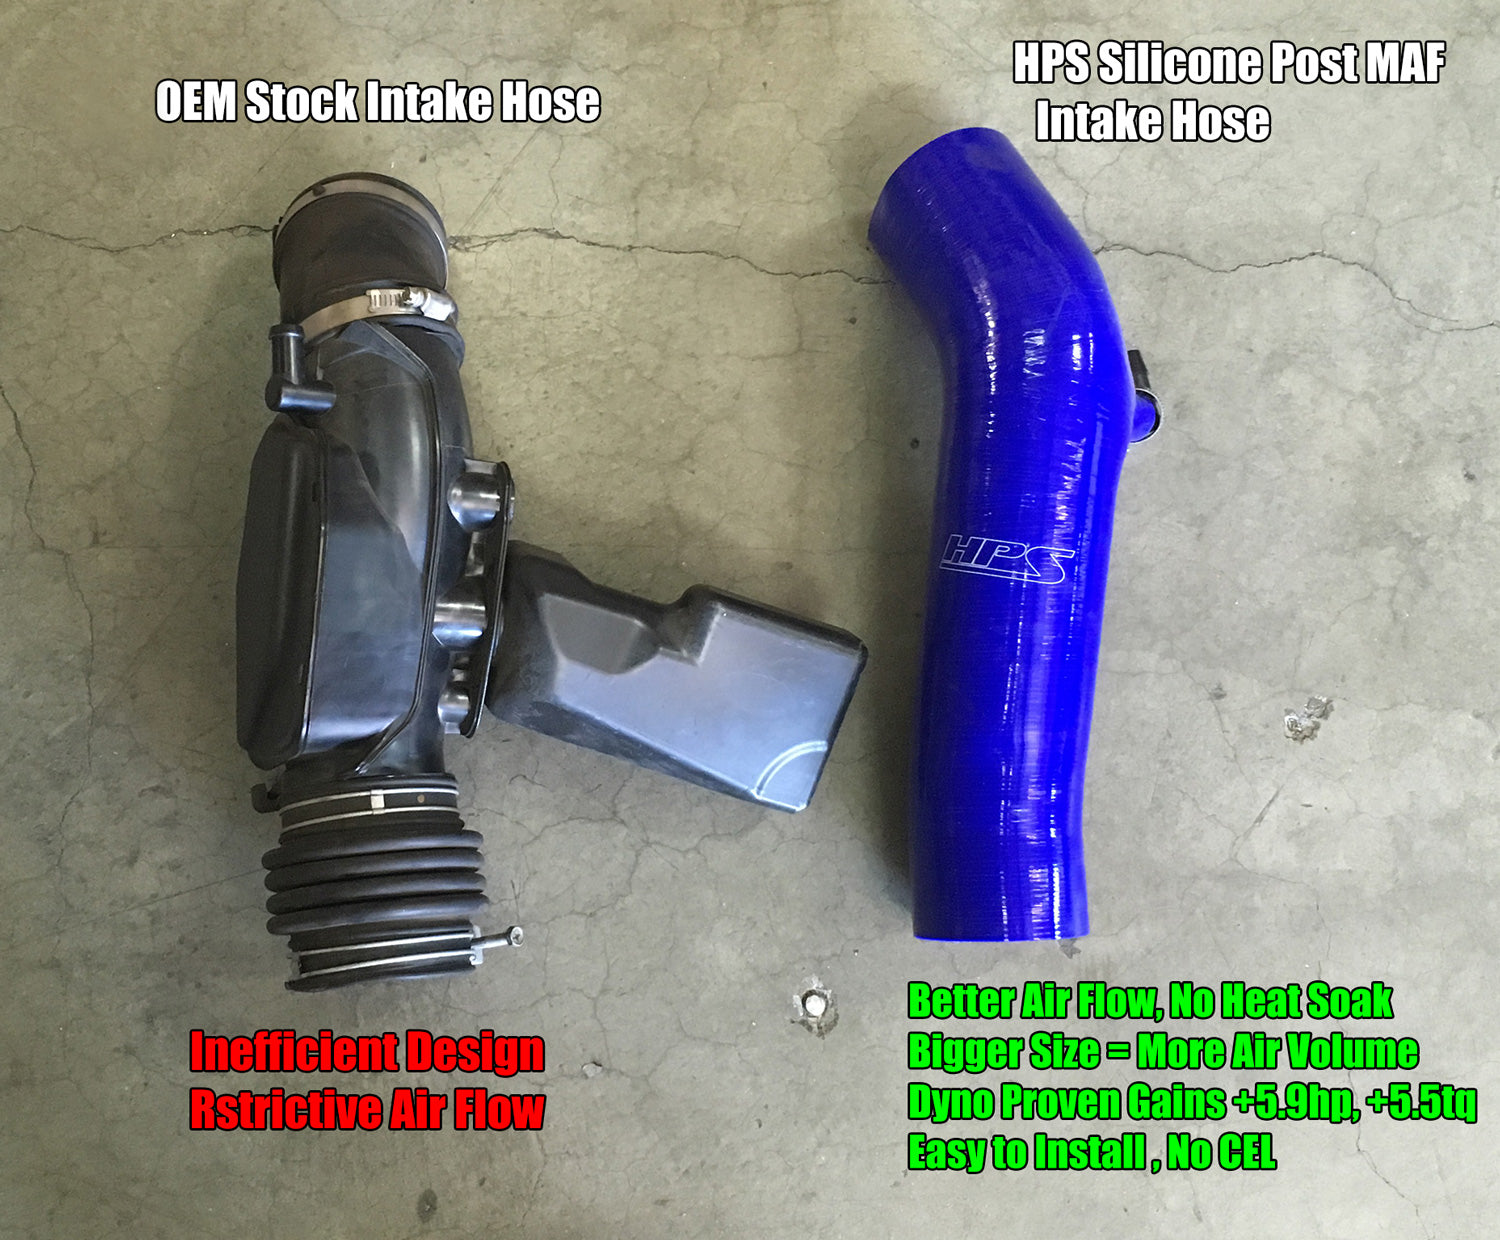 HPS Silicone Post MAF Air Intake Hose Kit Infiniti 06-08 M35 3.5L V6, 57-1592